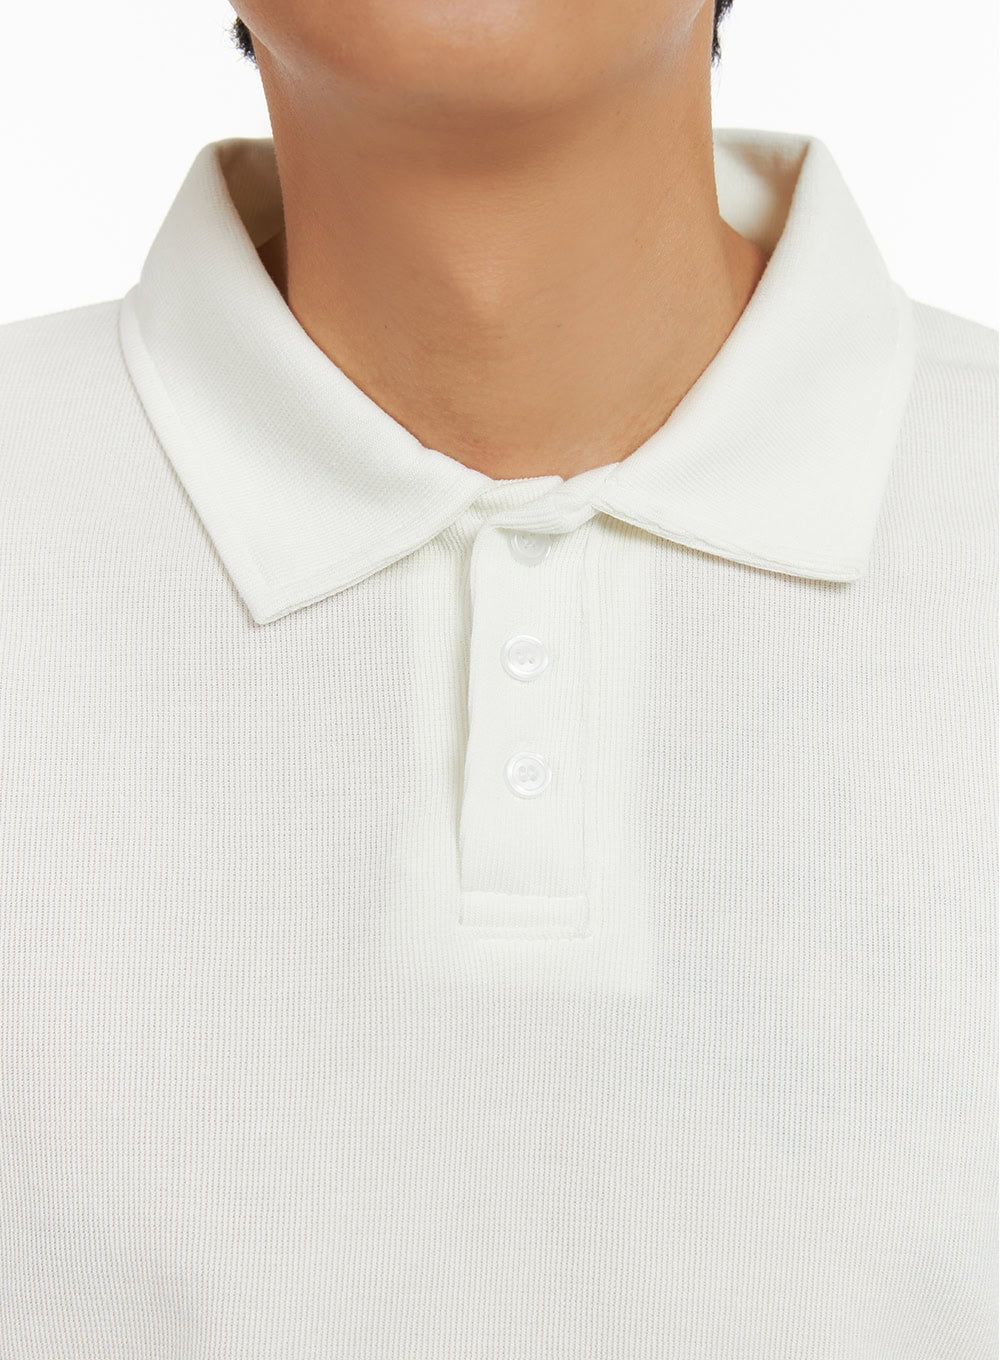 mens-basic-short-sleeve-polo-shirt-white-iy416